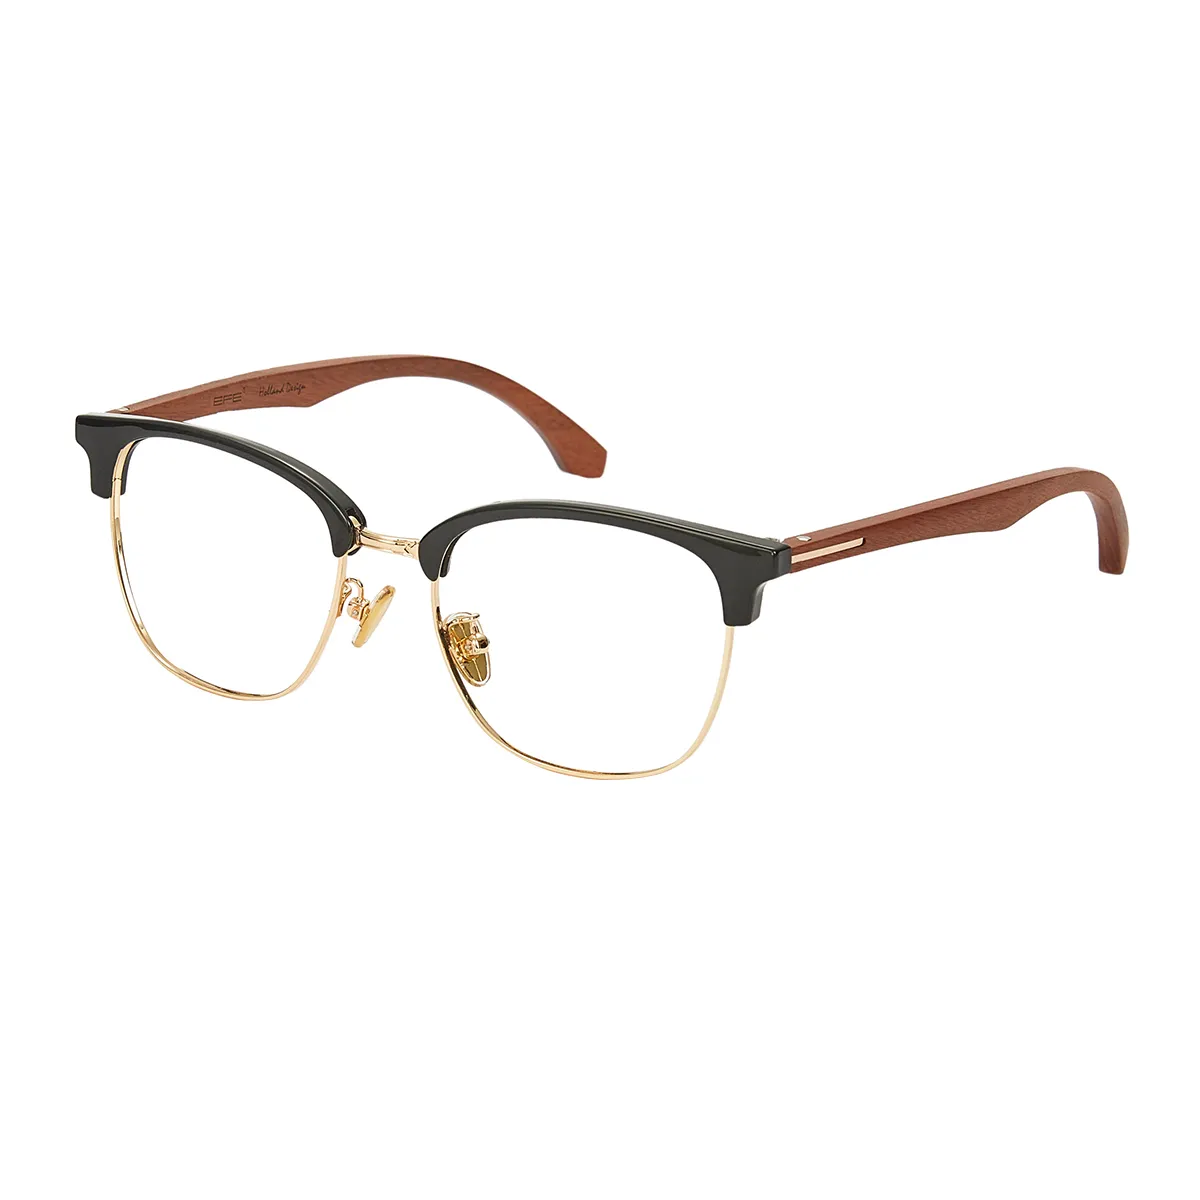 Bernal - Browline  Glasses for Men